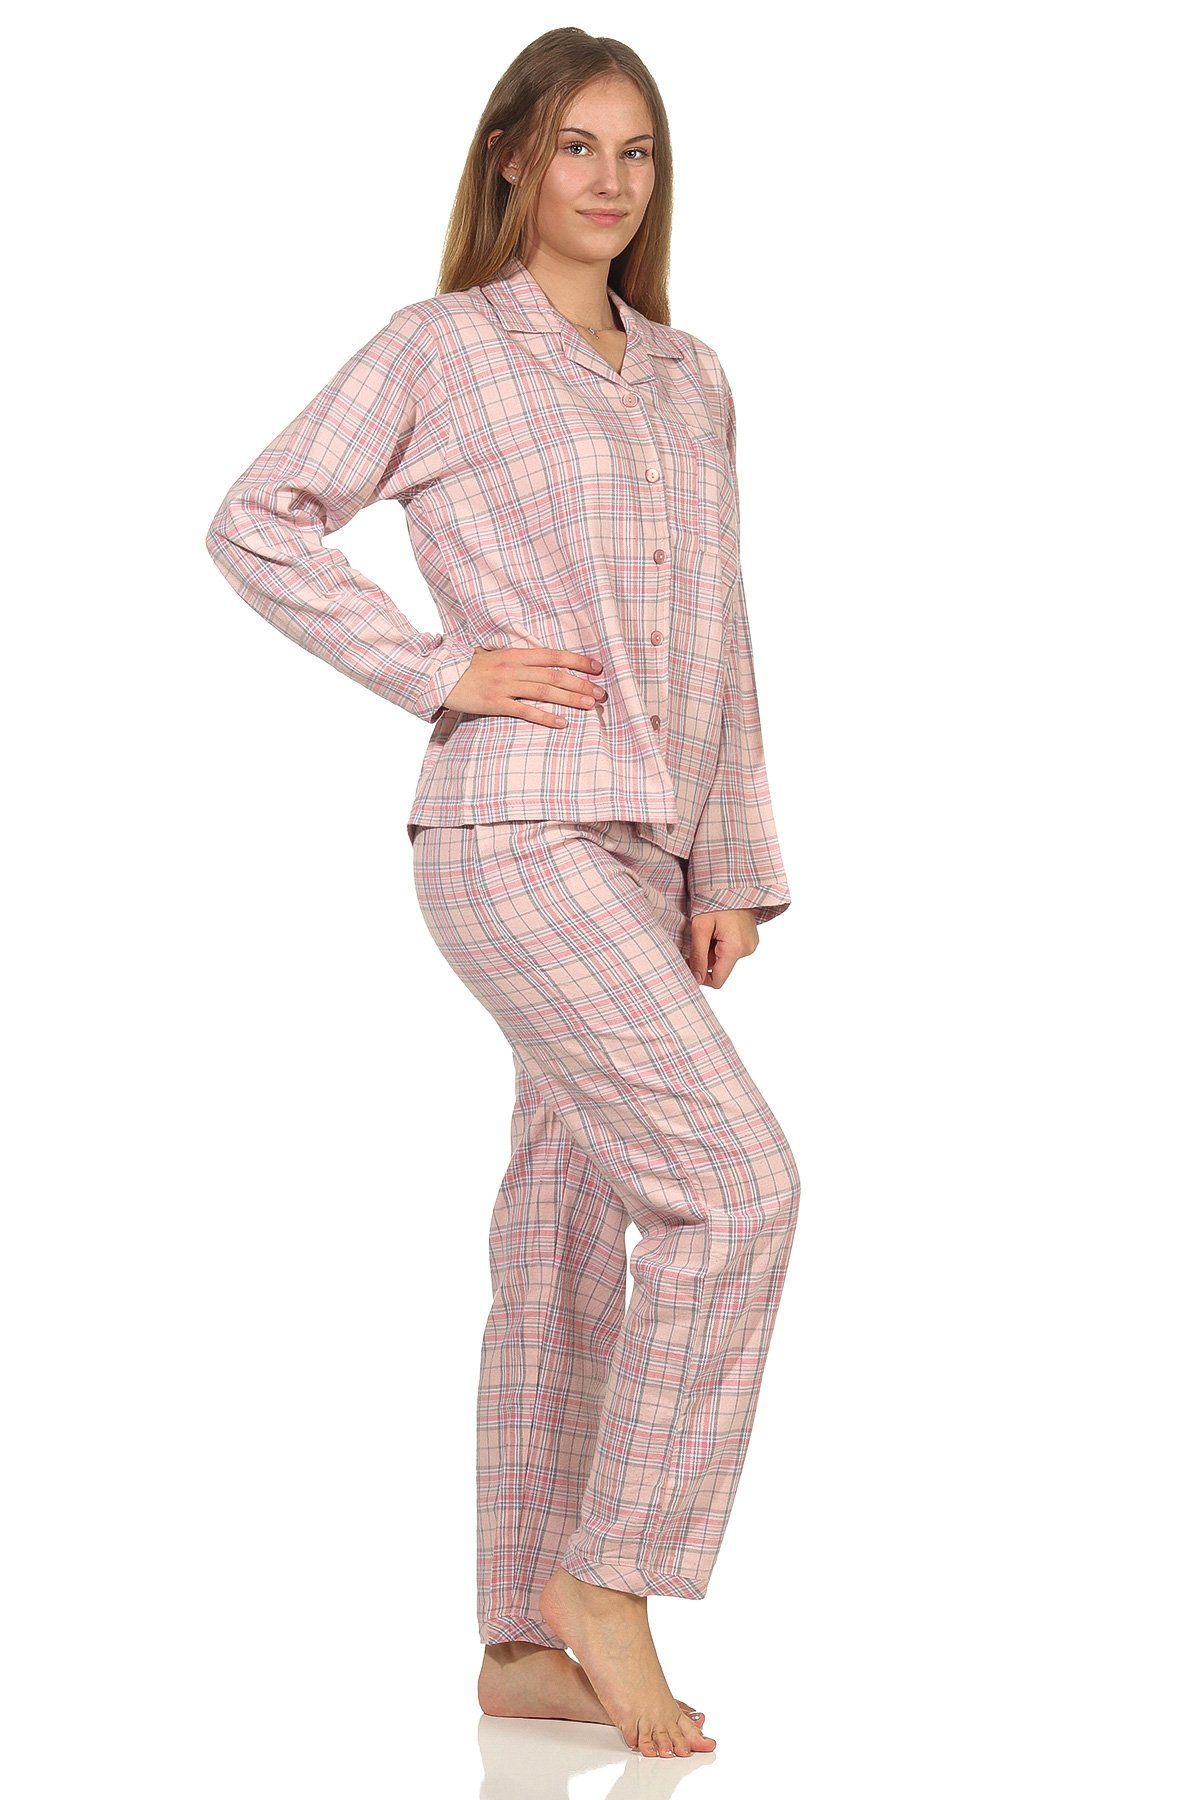 langarm rosa Schlafanzug 602 202 - 15 Normann kariert Damen Pyjama Flanell